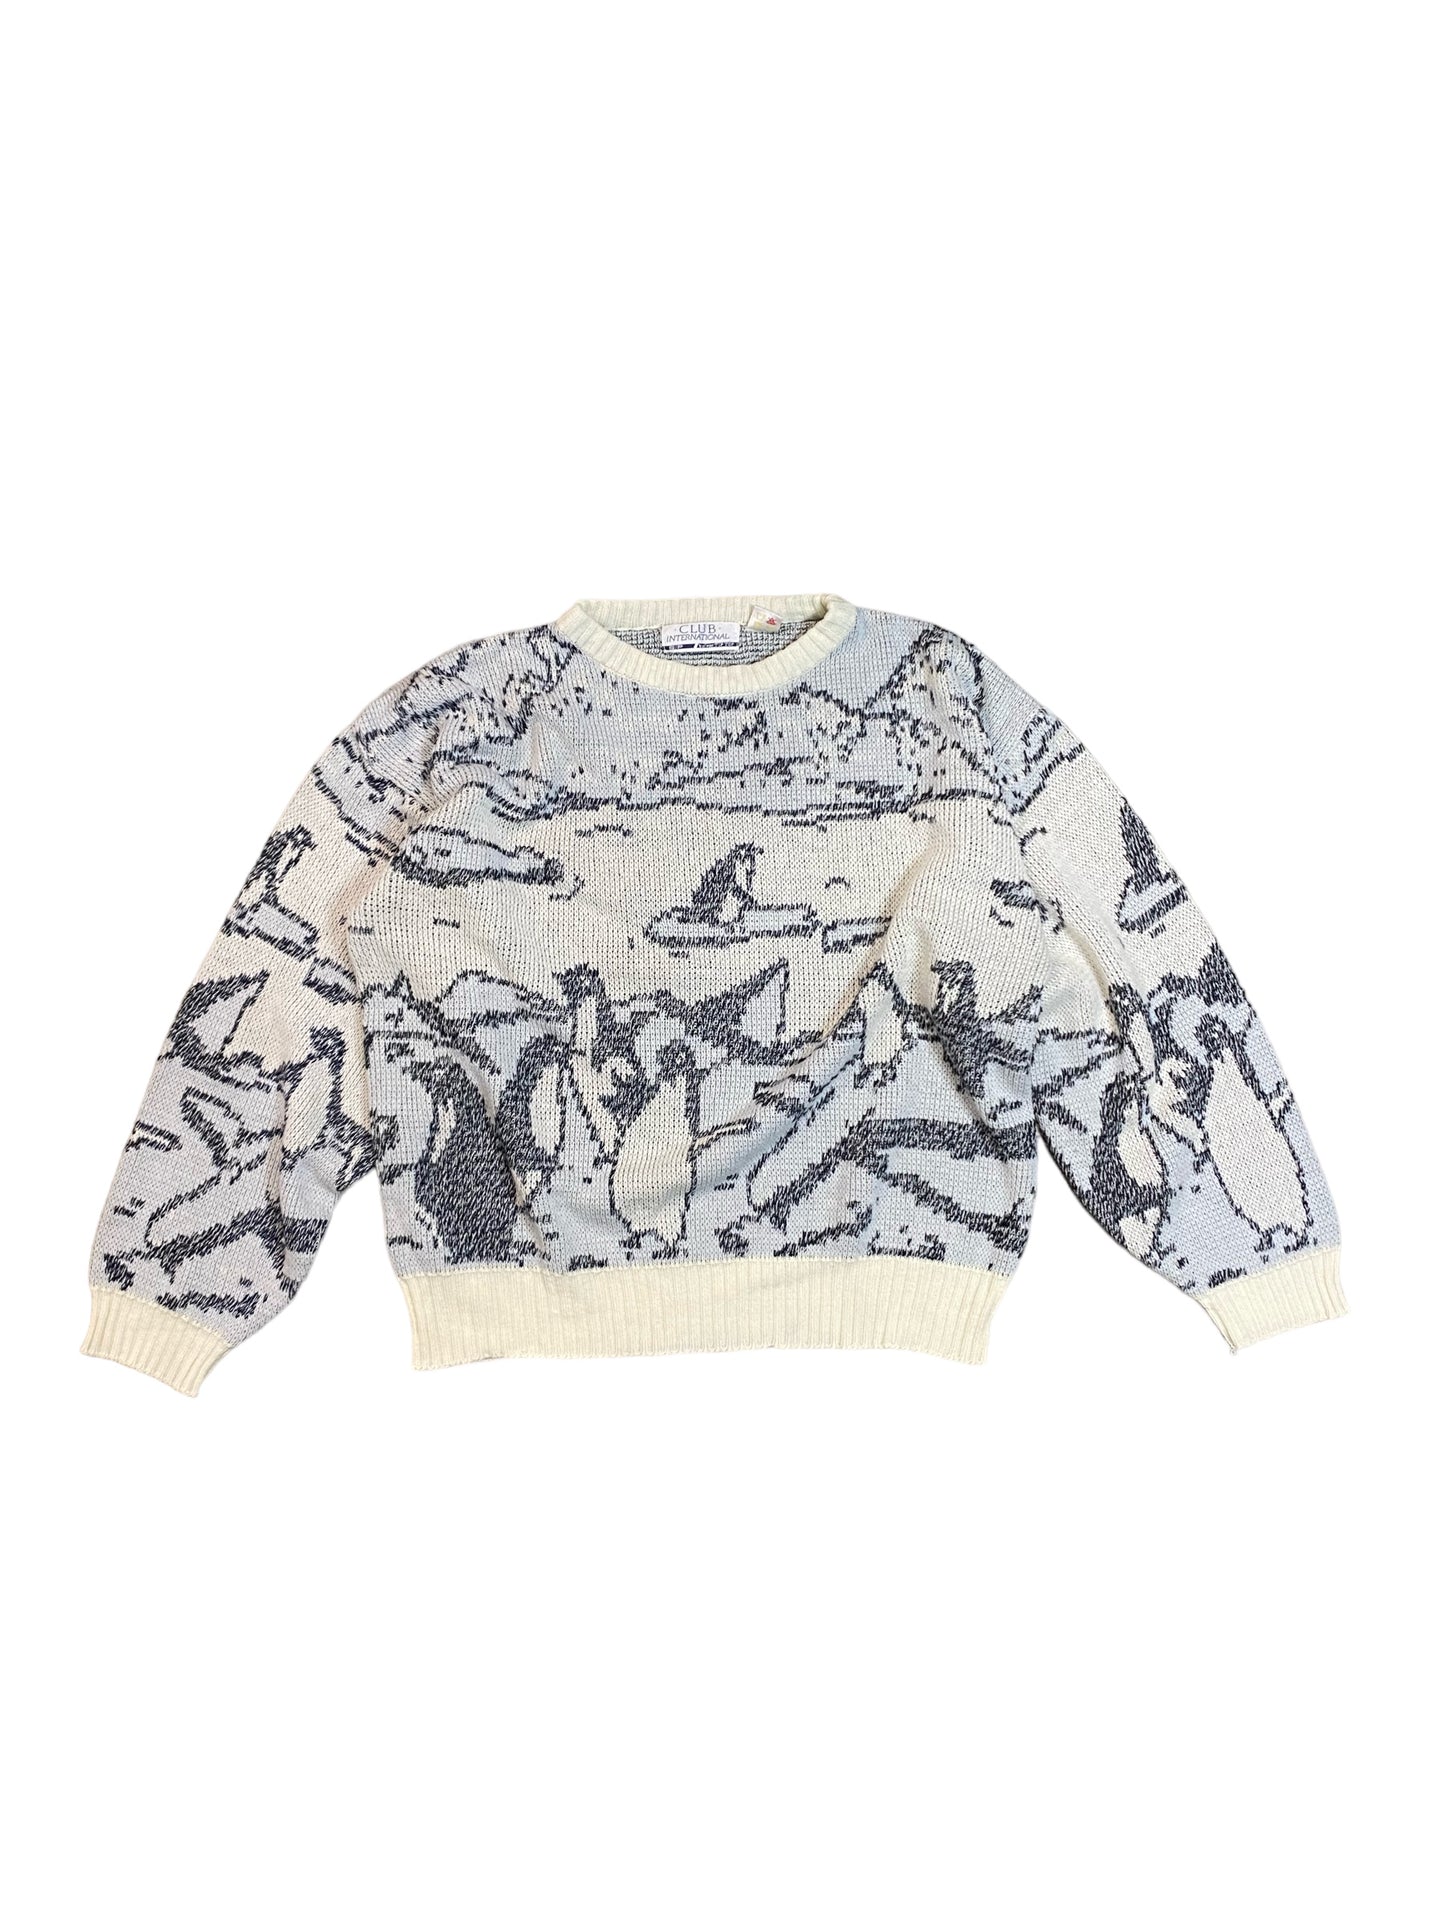 90s Monochrome Penguin Sweater (L)